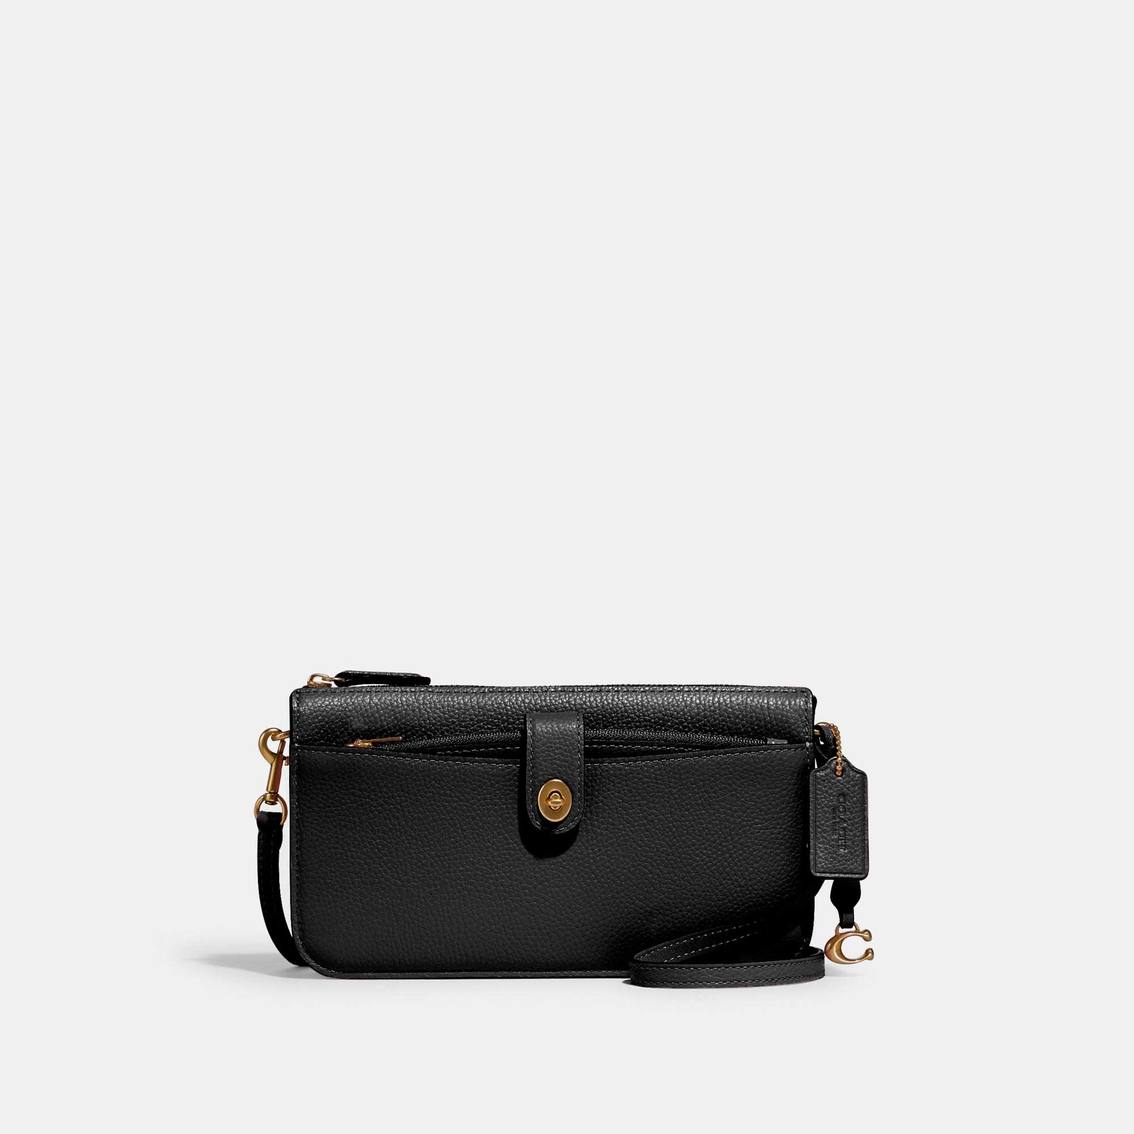 Coach Pebbled Leather Noa Convertible Handbag | Wristlets, Clutches ...